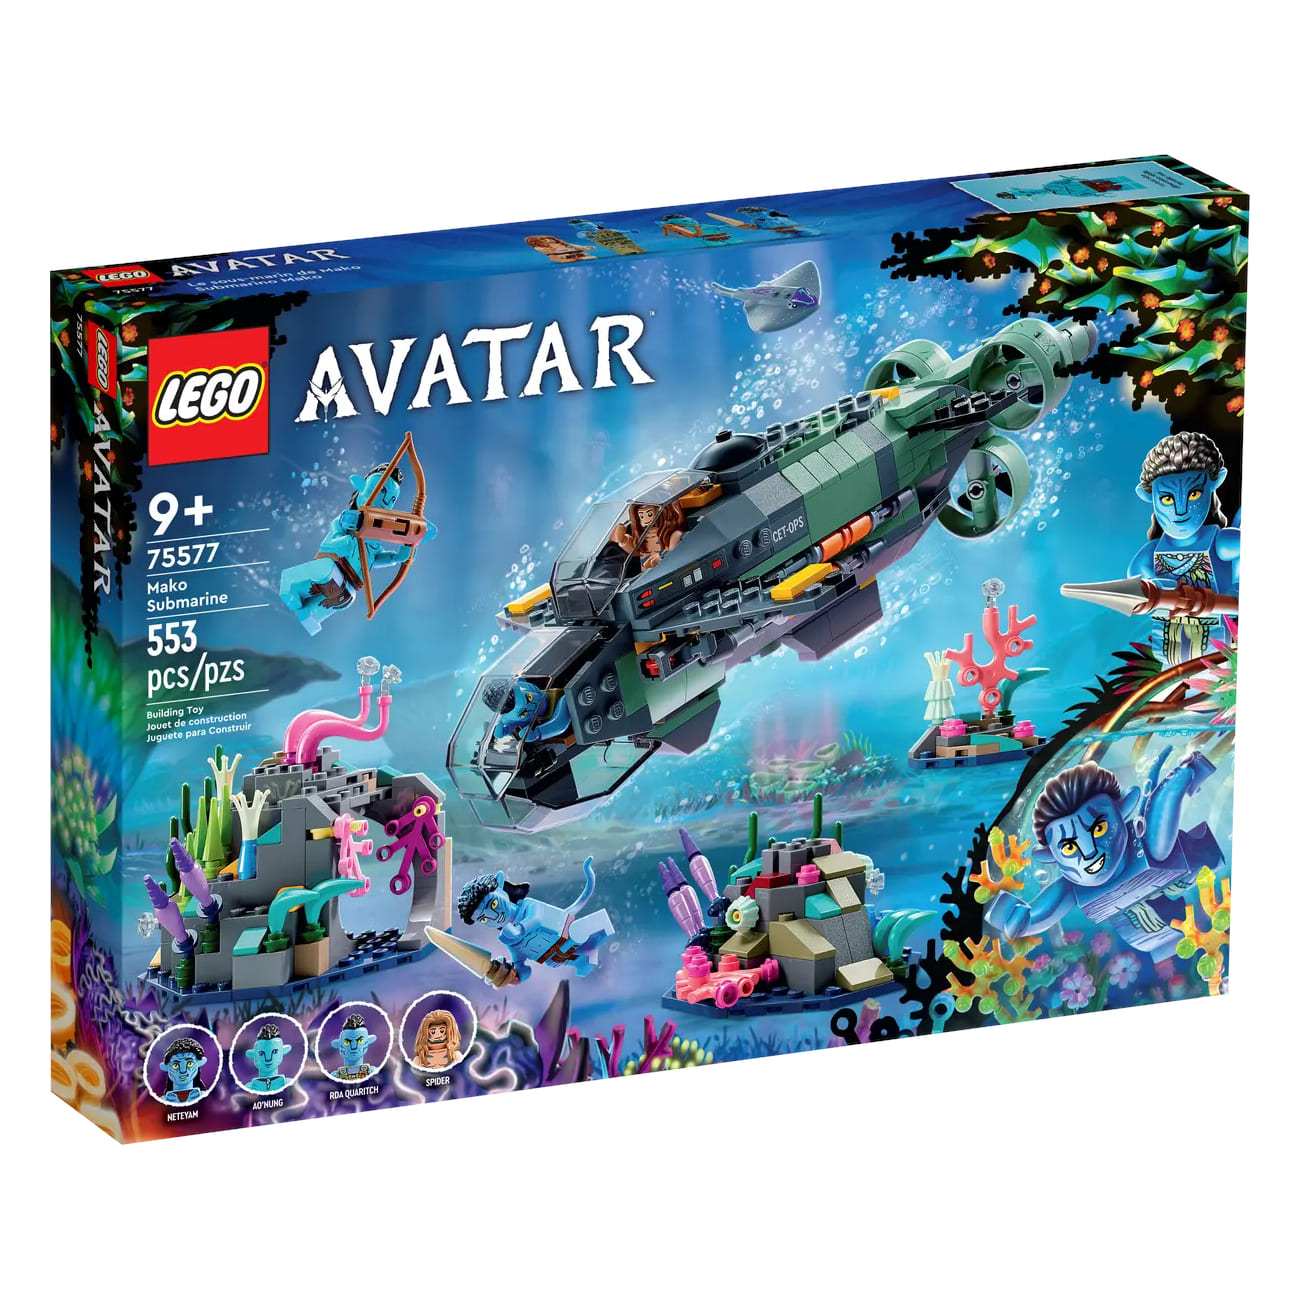 Конструктор LEGO Avatar Mako Submarine 75577, 553 детали конструктор lego avatar mako submarine 75577